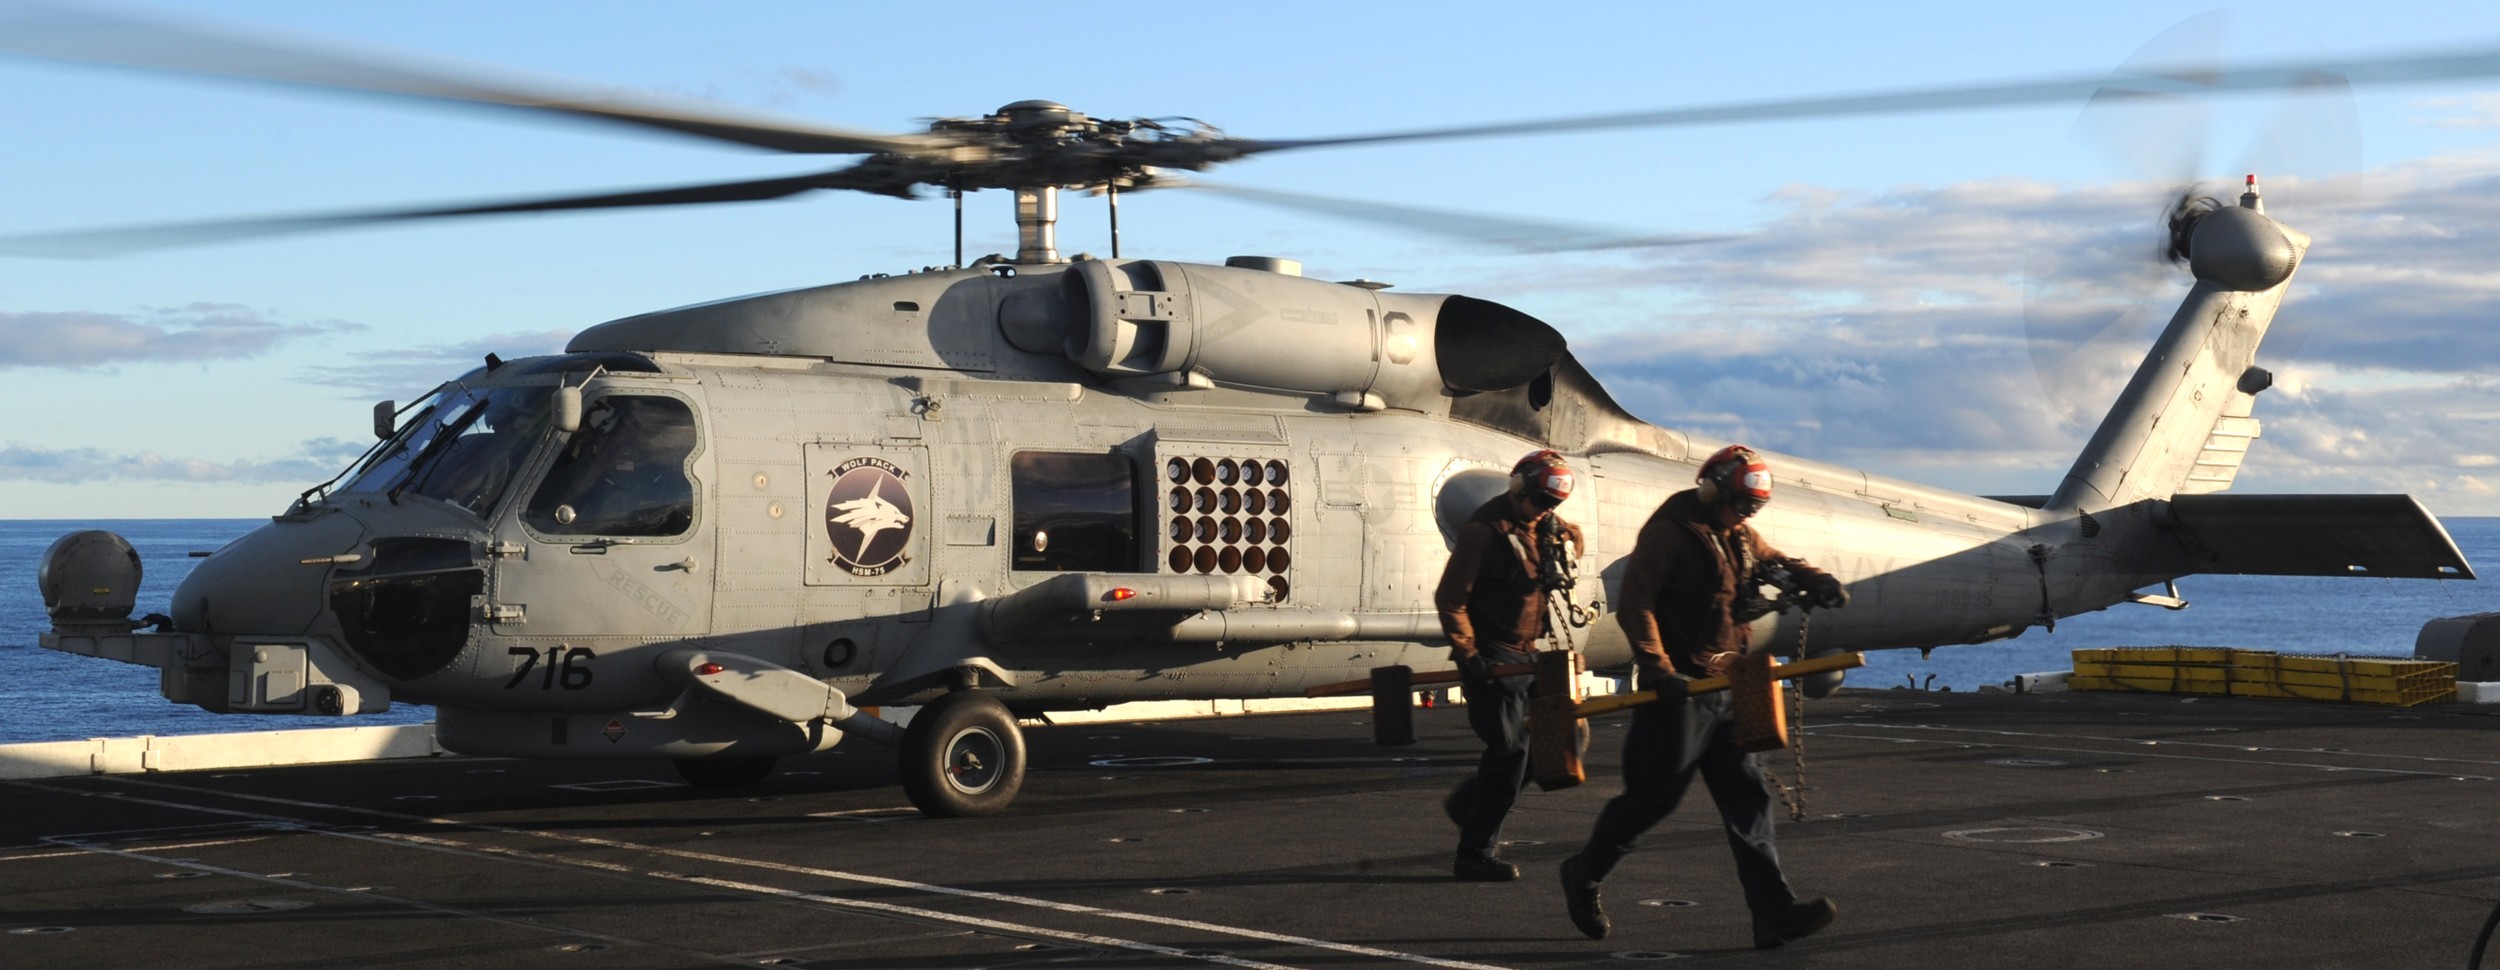 hsm-75 wolf pack helicopter maritime strike squadron mh-60r seahawk cvw-11 cvn-68 uss nimitz 2012 73